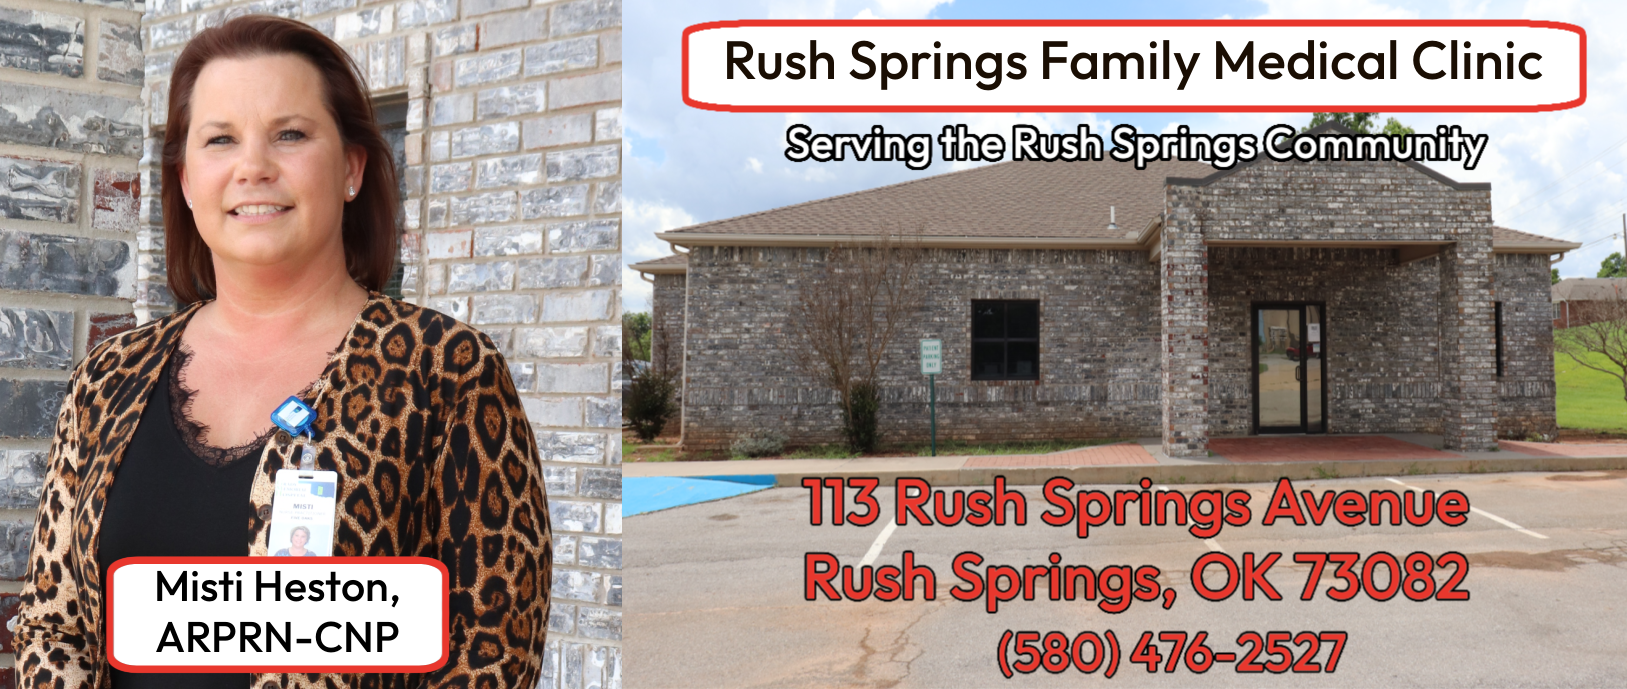 Serving The Rush Springs Community

113 Rush Springs Avenue
Rush Springs, OK 73082
(580) 476-2527